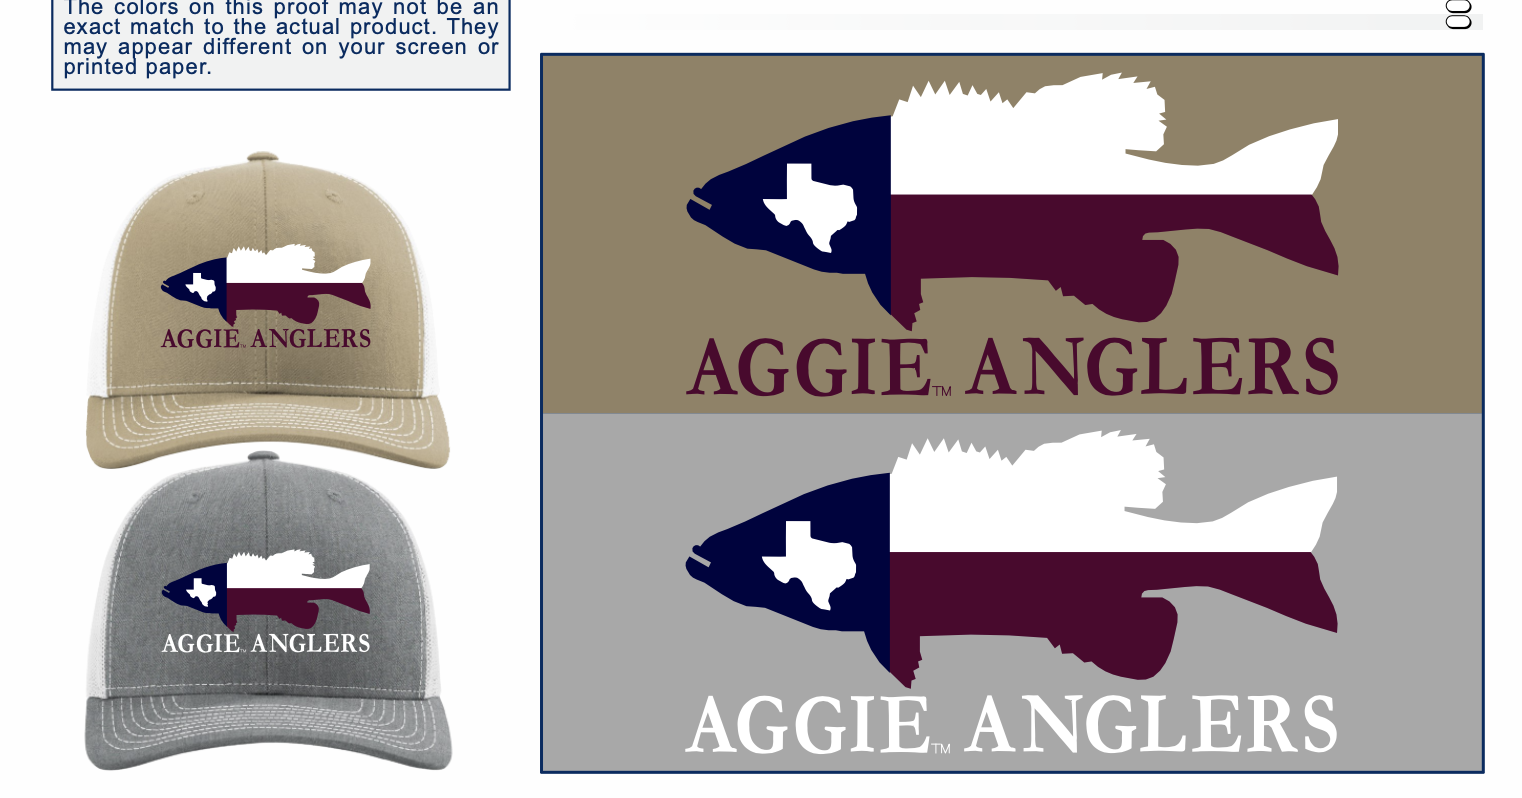 Aggie Angler cap - Products - Texas A&M University eStore